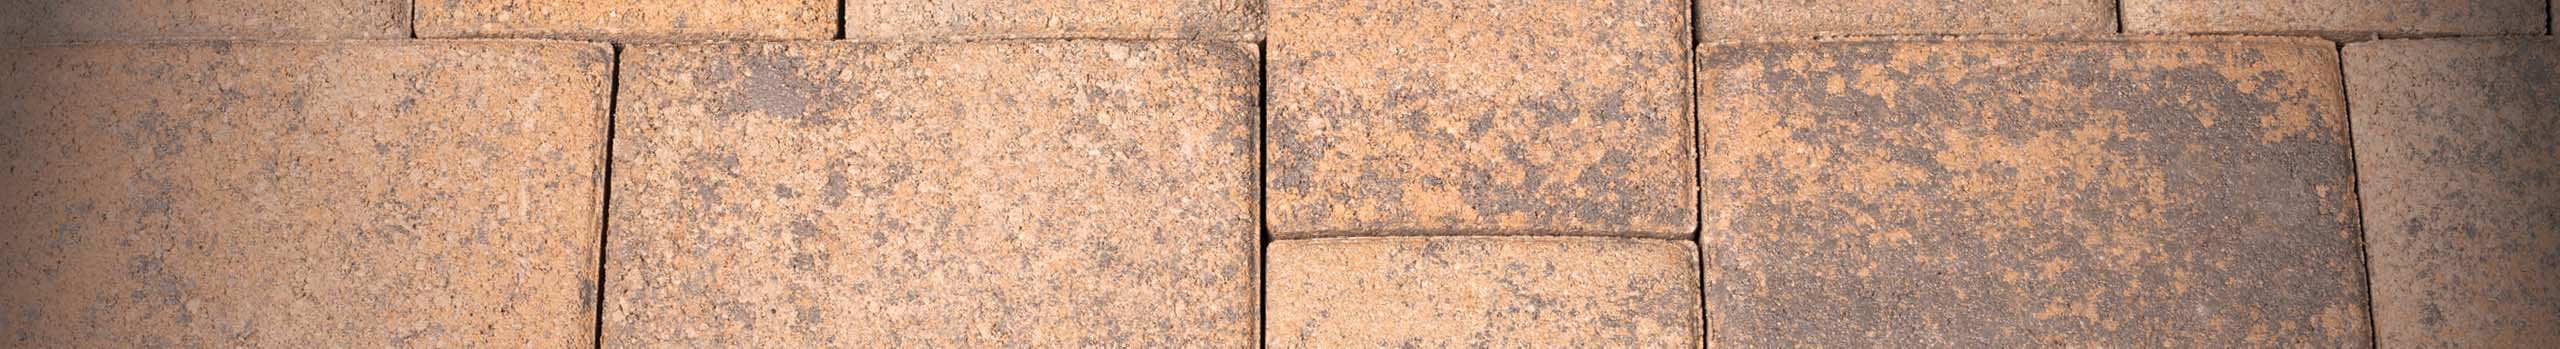 brick pavers close up